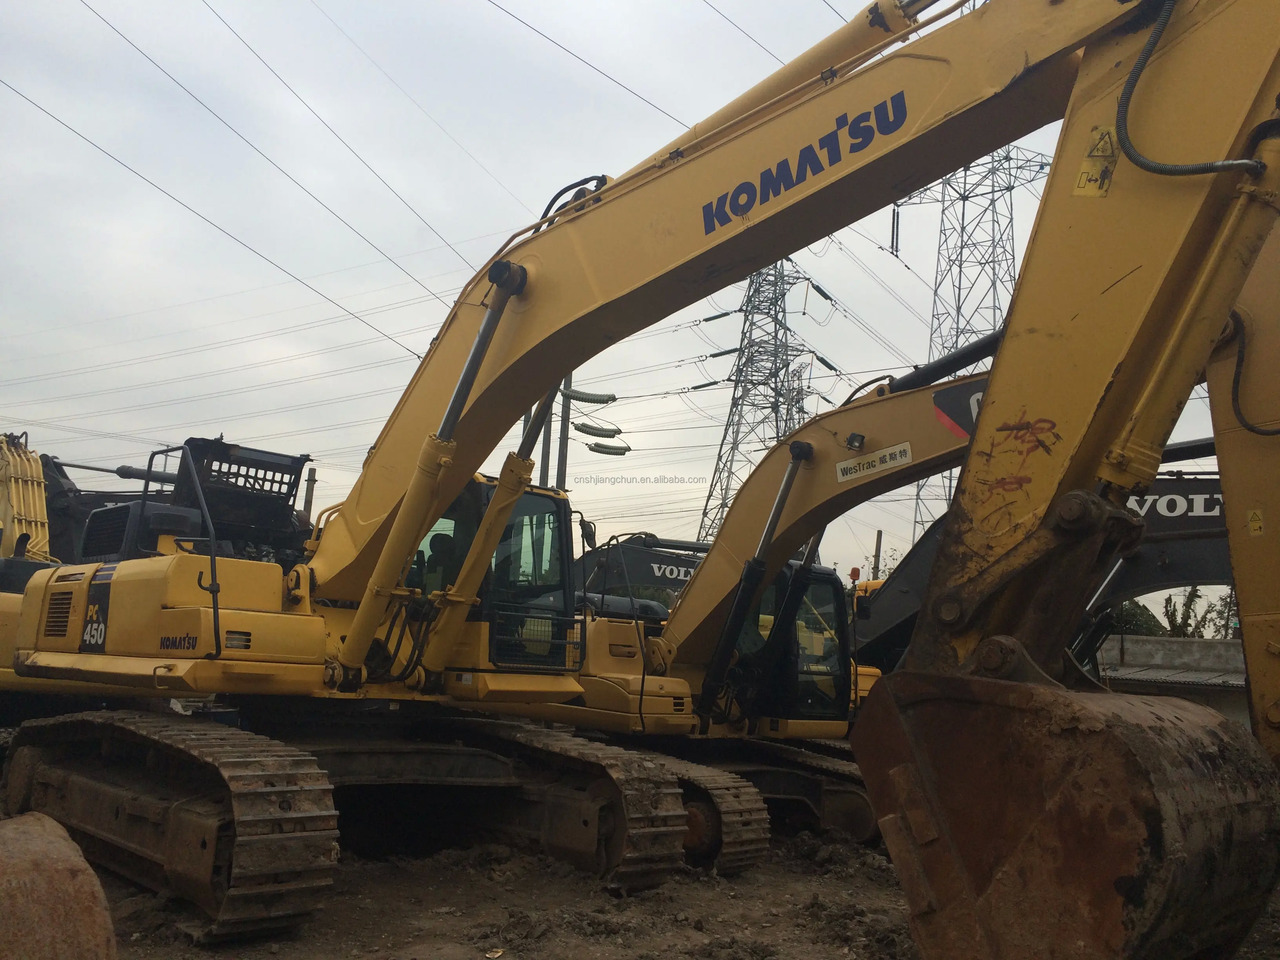 Гусеничный экскаватор Used Komatsu excavator Pc450-8 in good condition for sale: фото 6